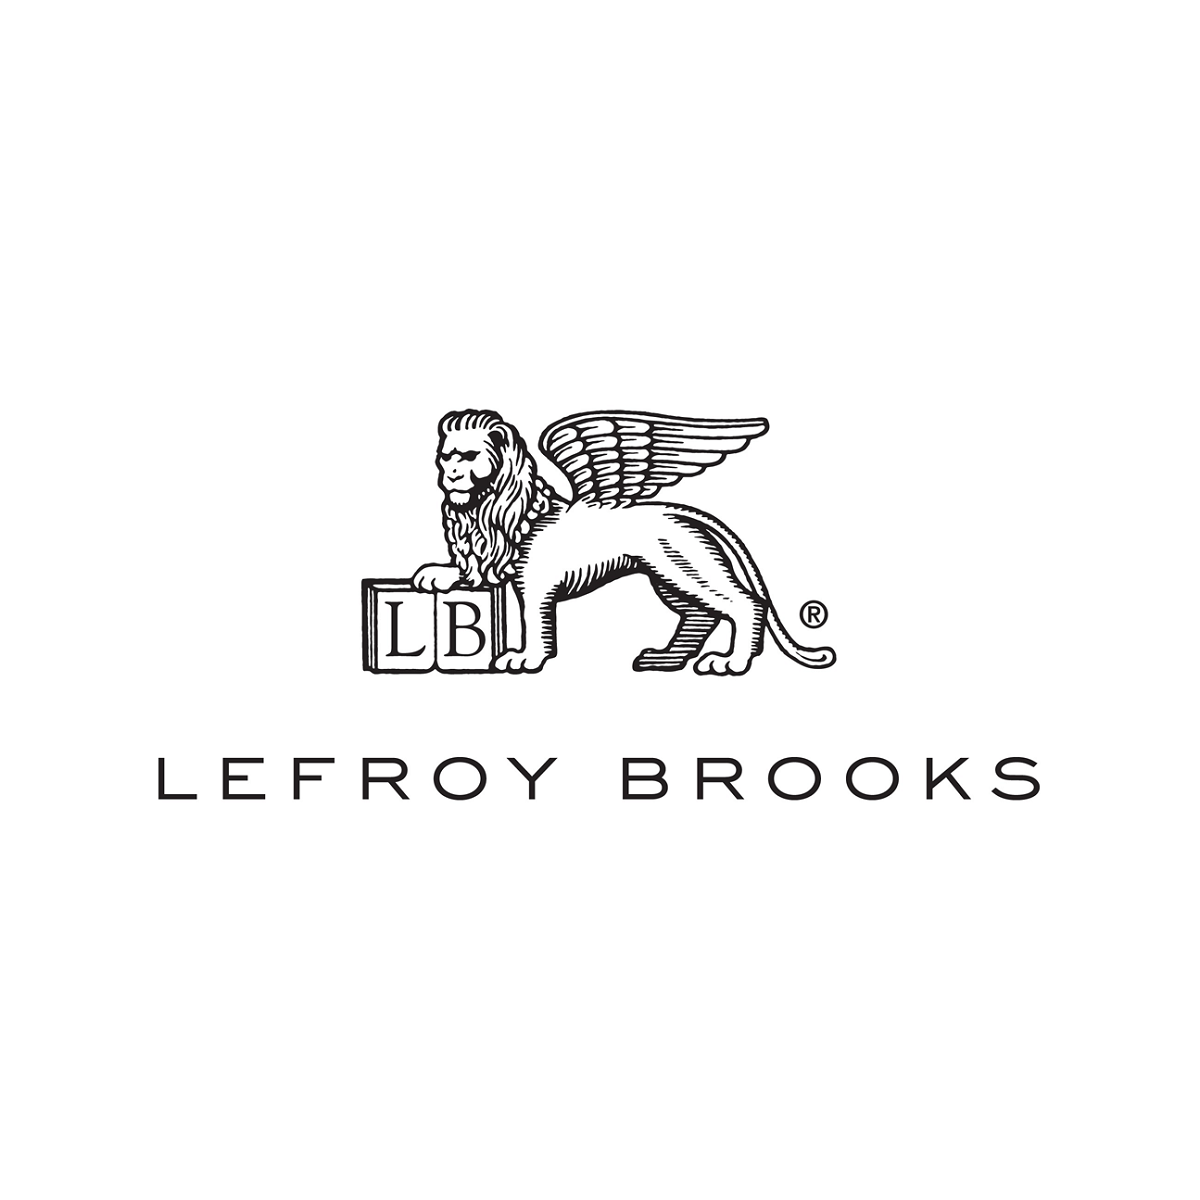 LEFROY BROOKS M-6009 ELONGATED TOILET SEAT